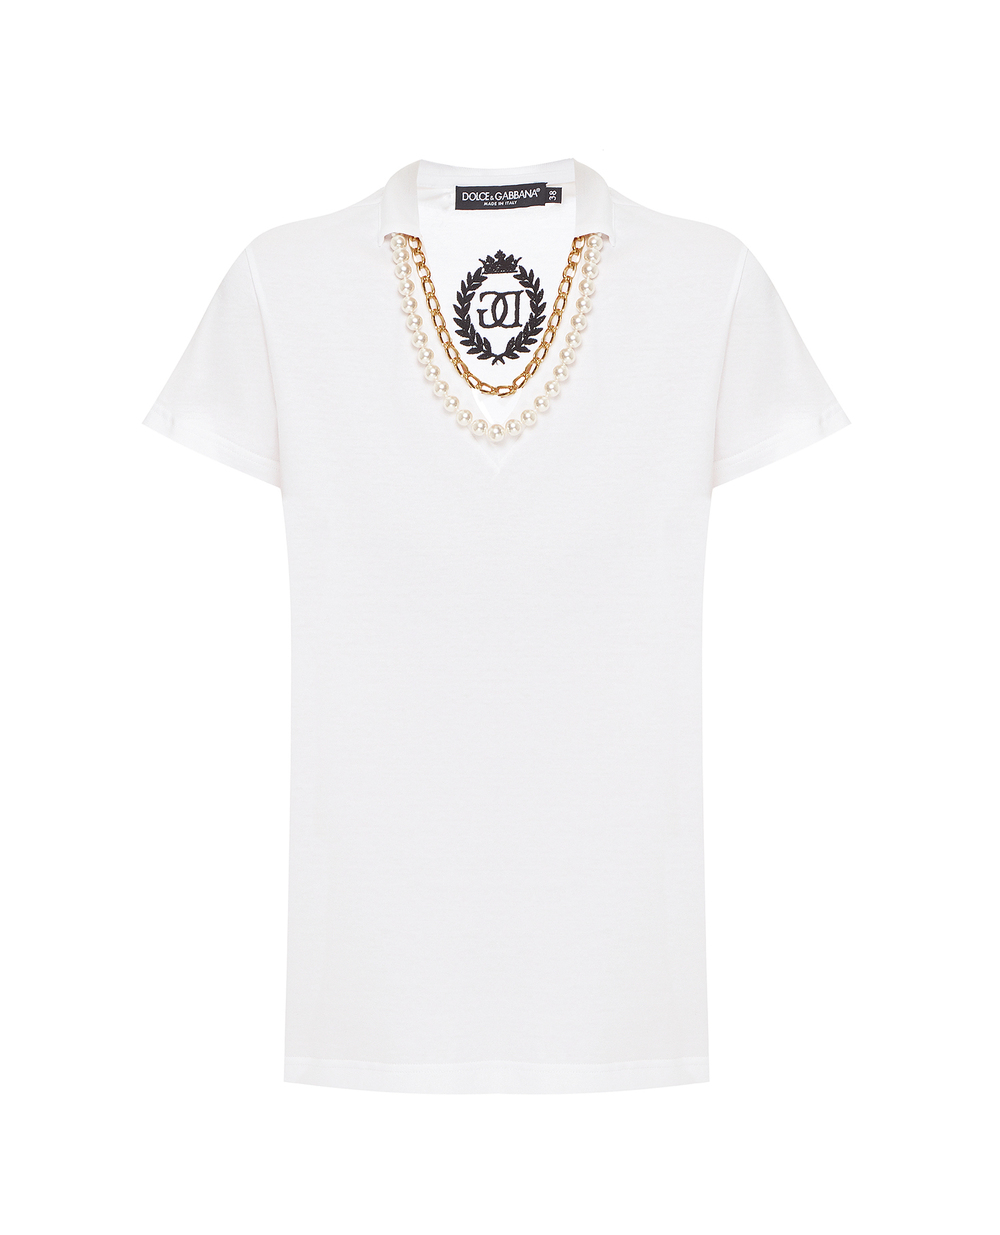 Футболка Dolce&Gabbana F8M43Z-G7XGE, белый цвет • Купить в интернет-магазине Kameron